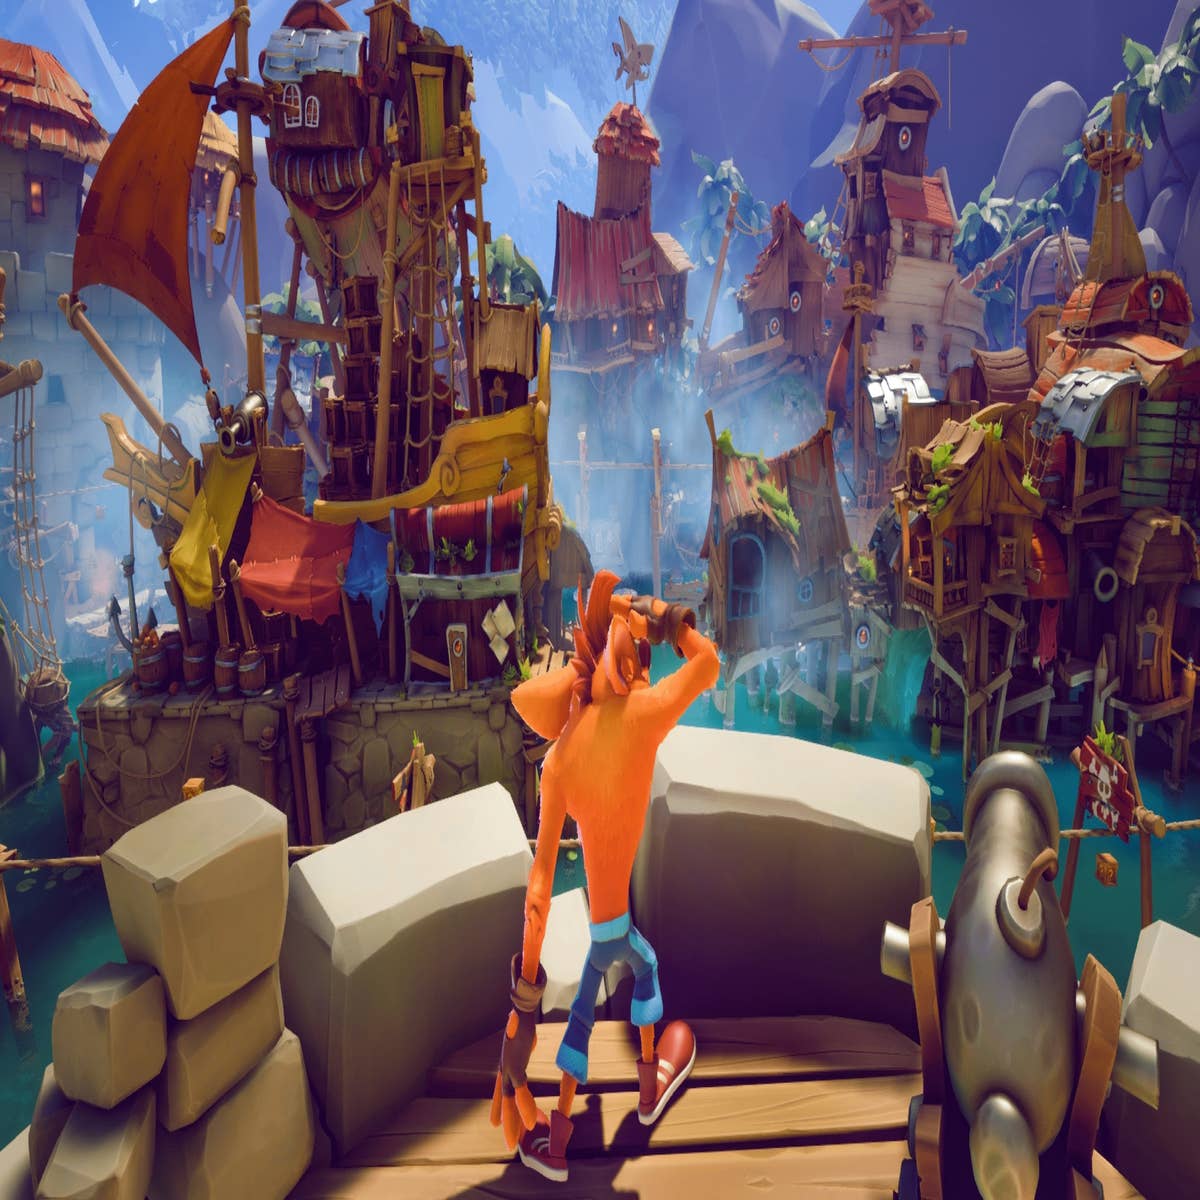 XboxOne Crash Bandicoot 4: Its About Time